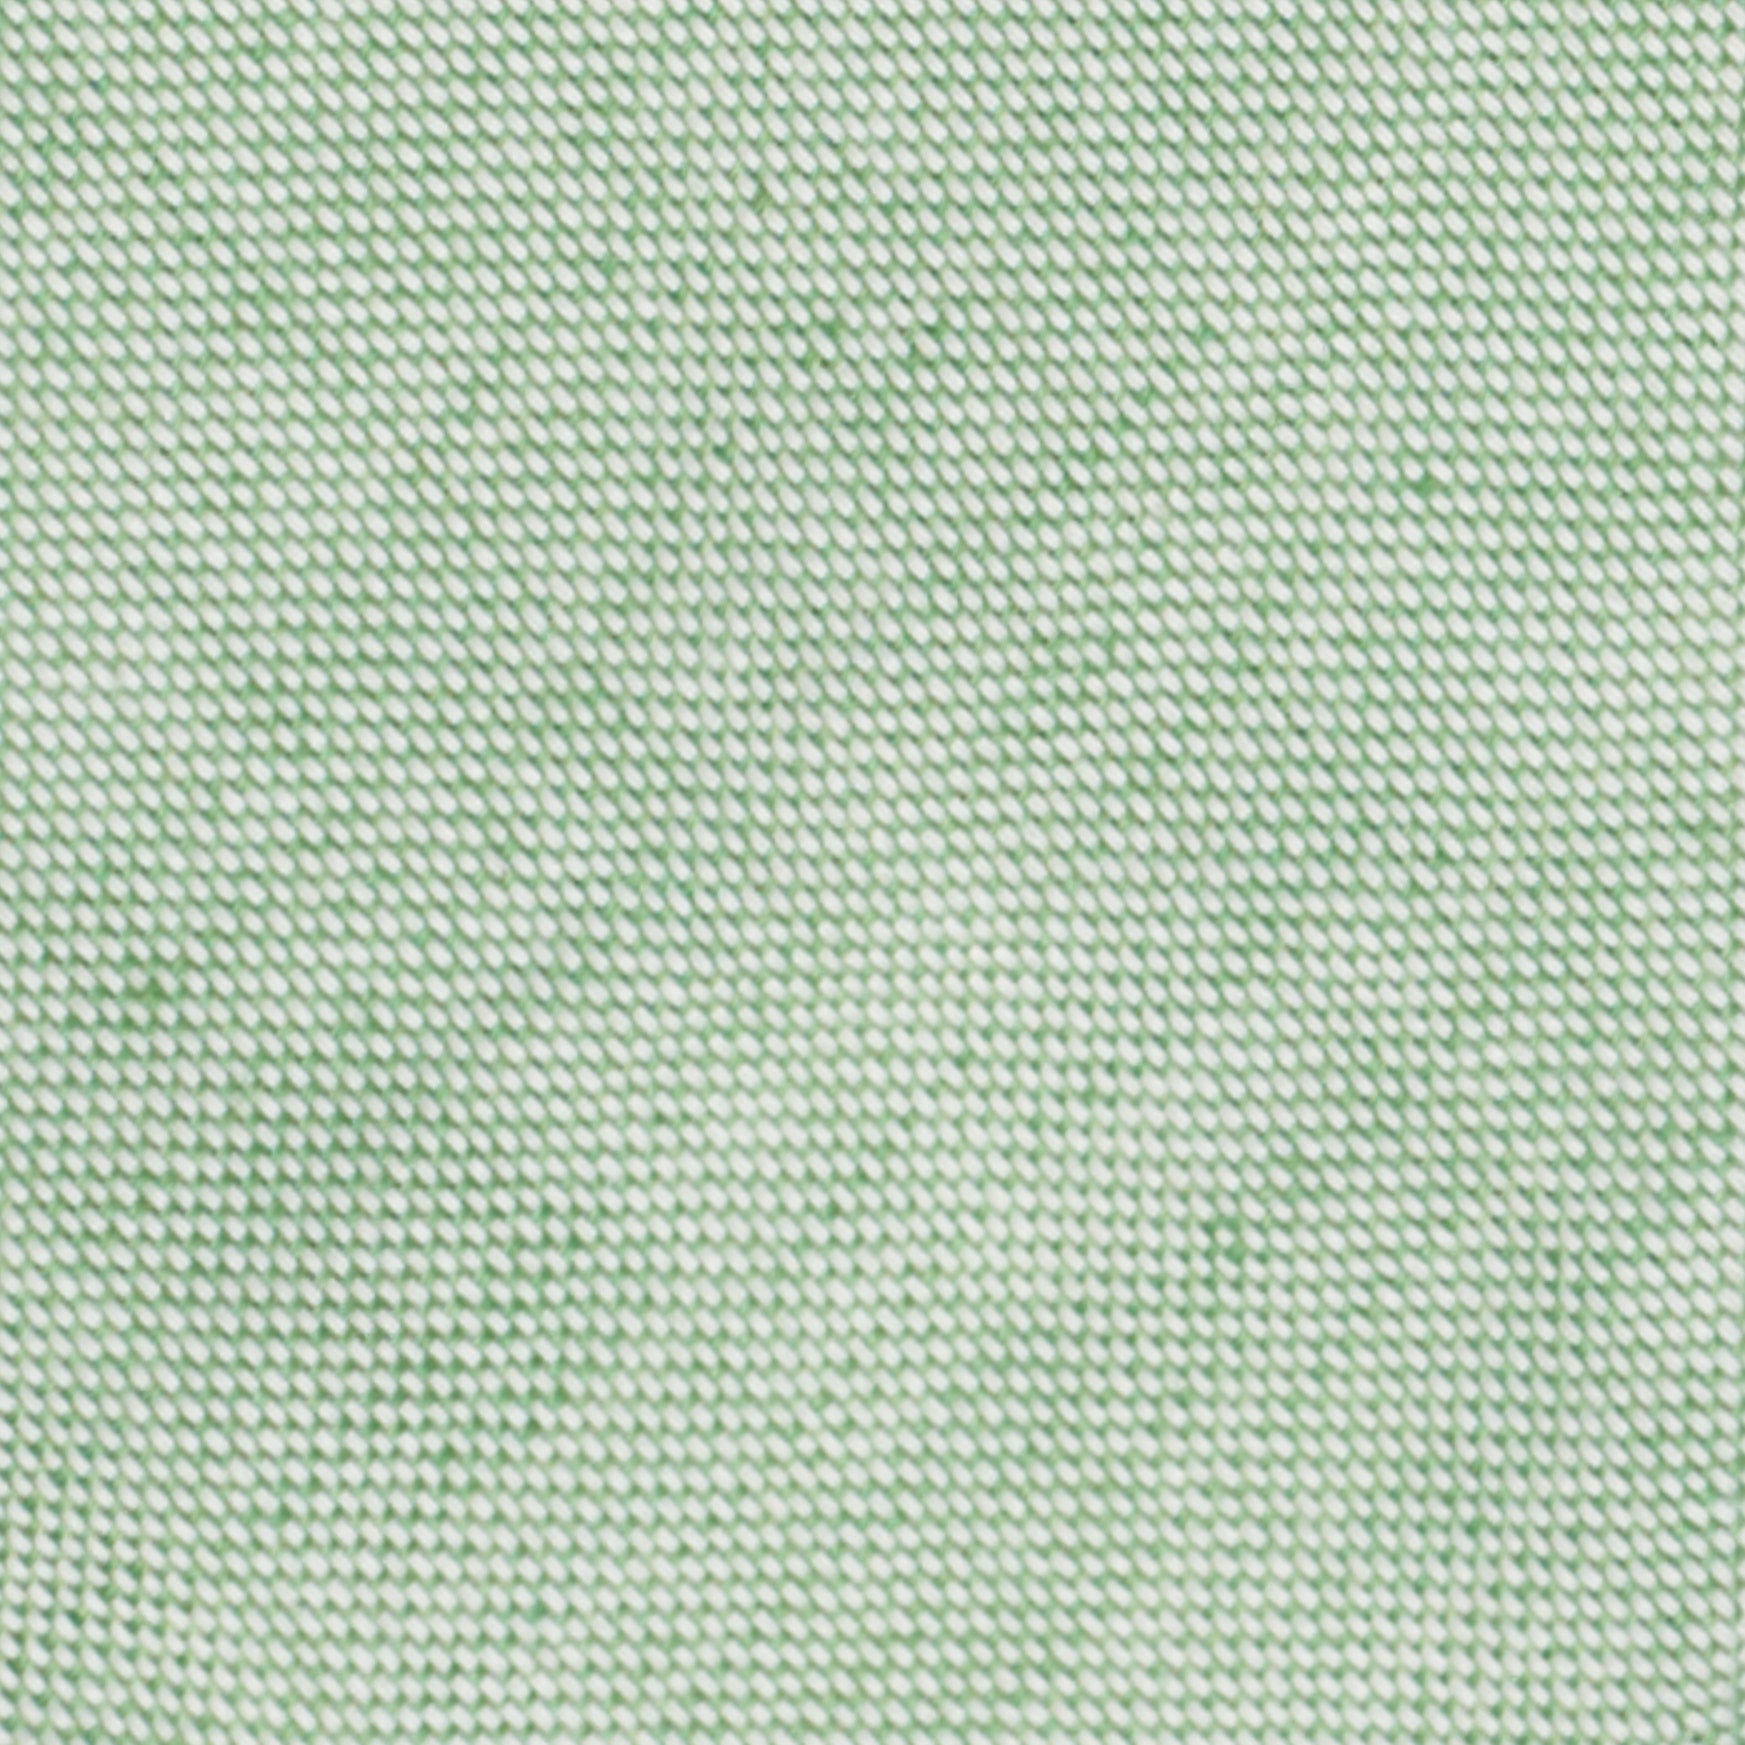 GIUSTO Bespoke Handmade Green Linen-Cotton Unlined Tie GIUSTO